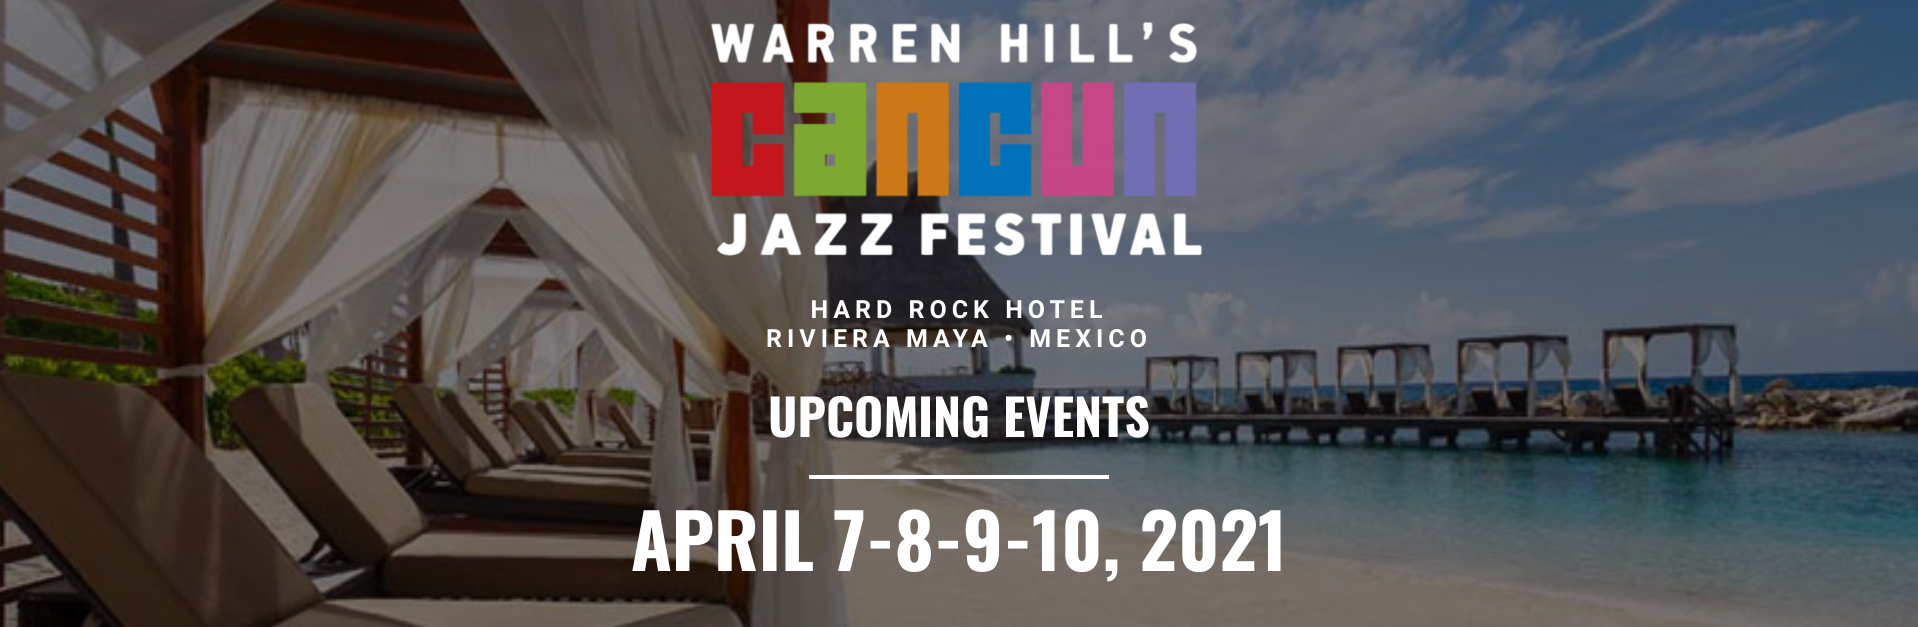 BDR Events & Tours Warren Hill's Cancun Jazz Festival